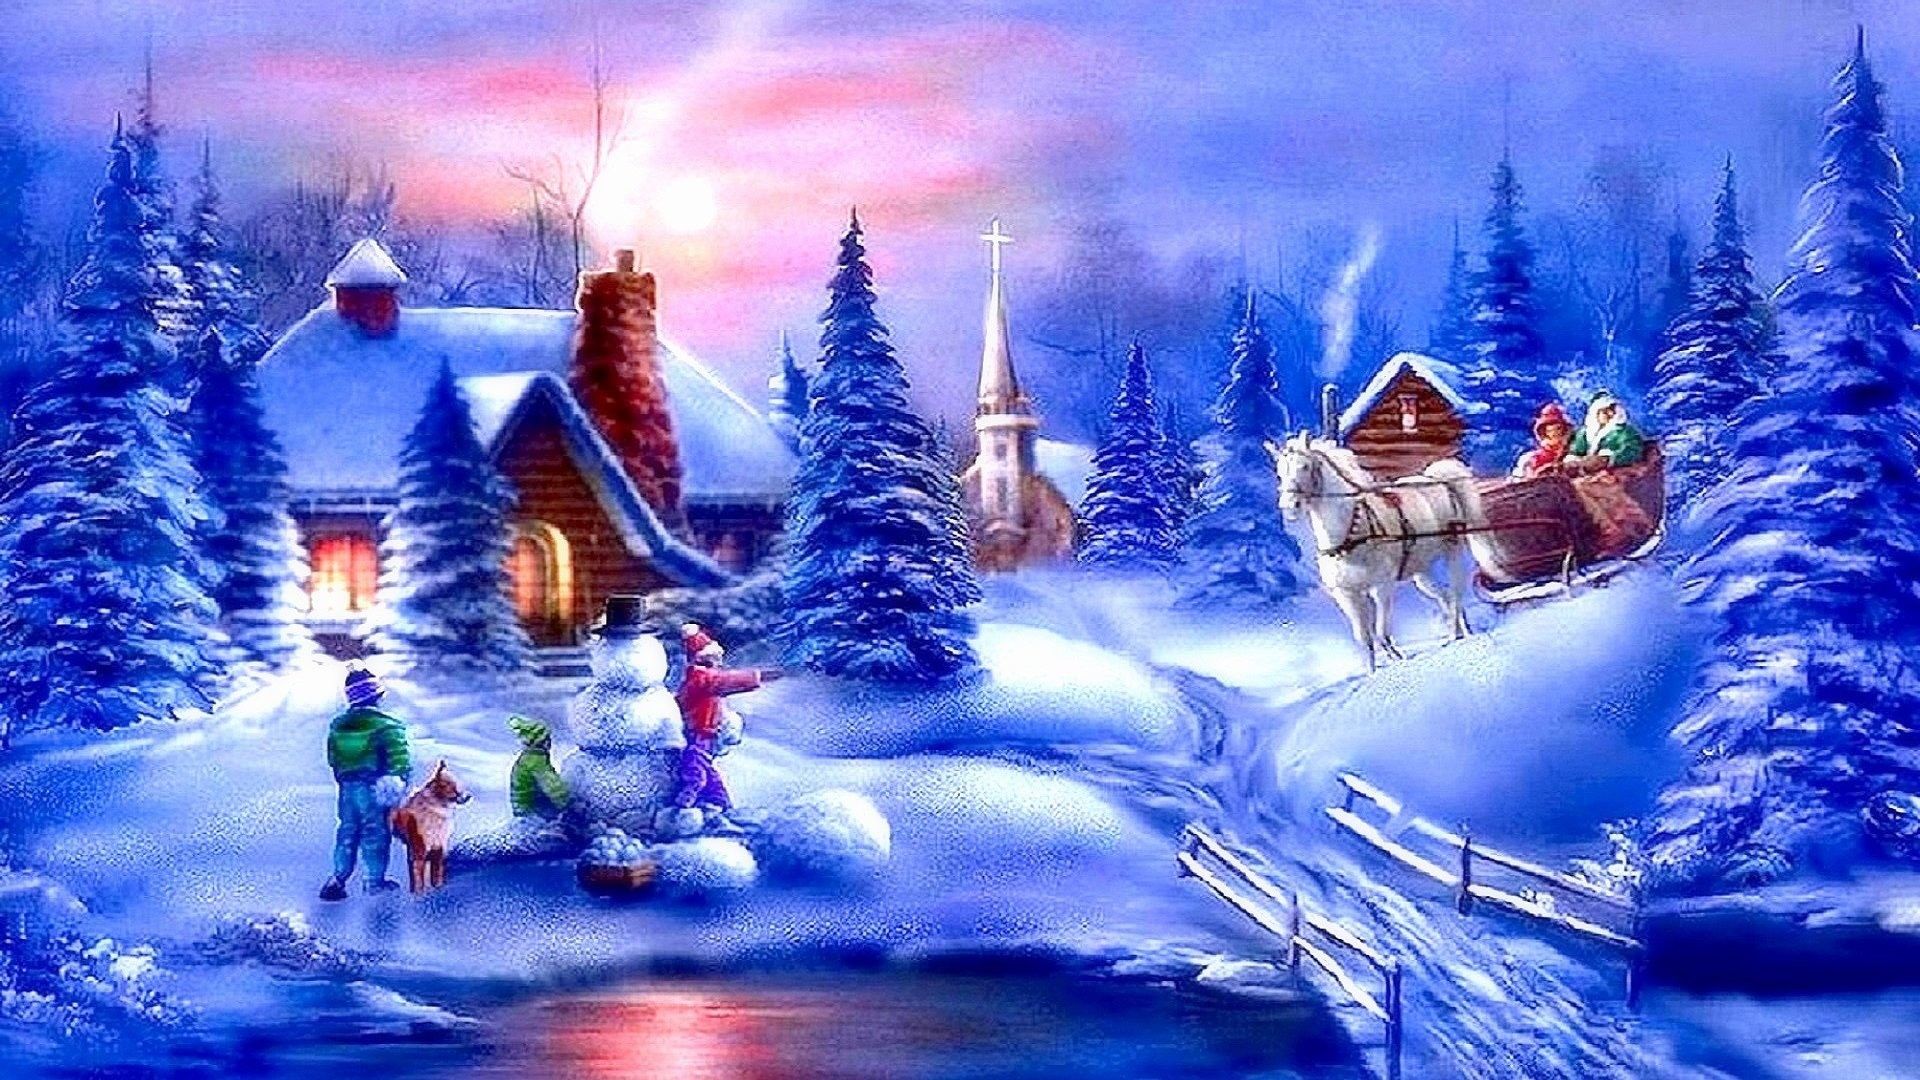 Carriage Greetings Winter Churches Creek Paintings Christmas Scenes HD Wallpaper